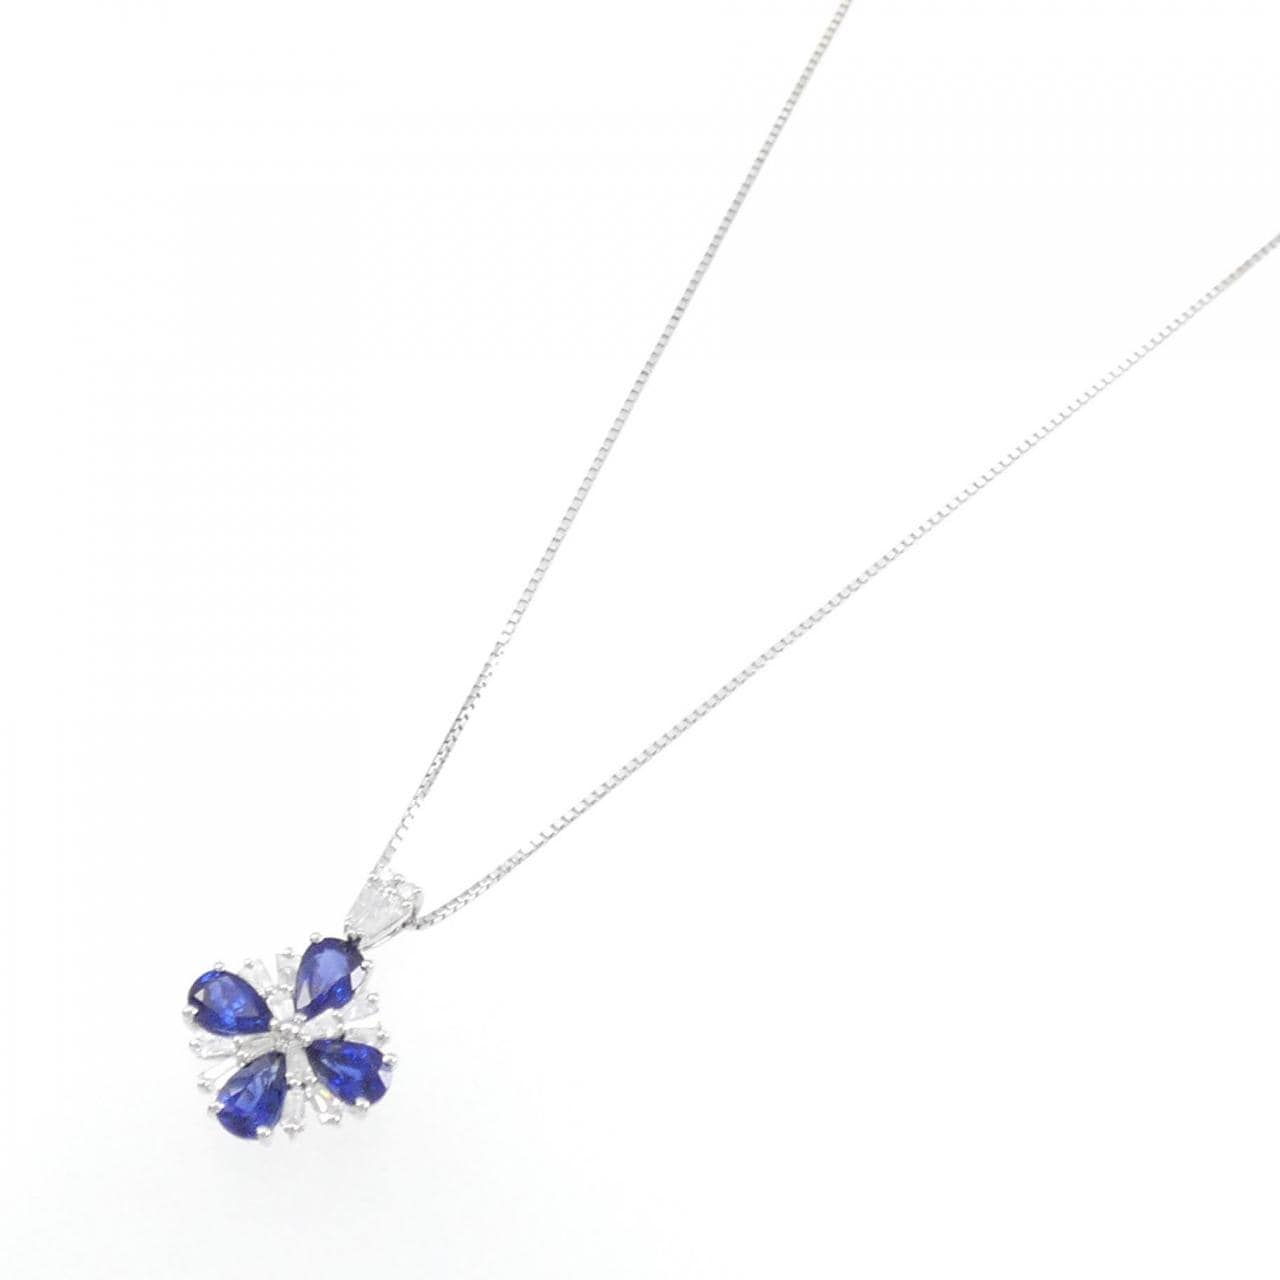 K18WG sapphire necklace 1.80CT